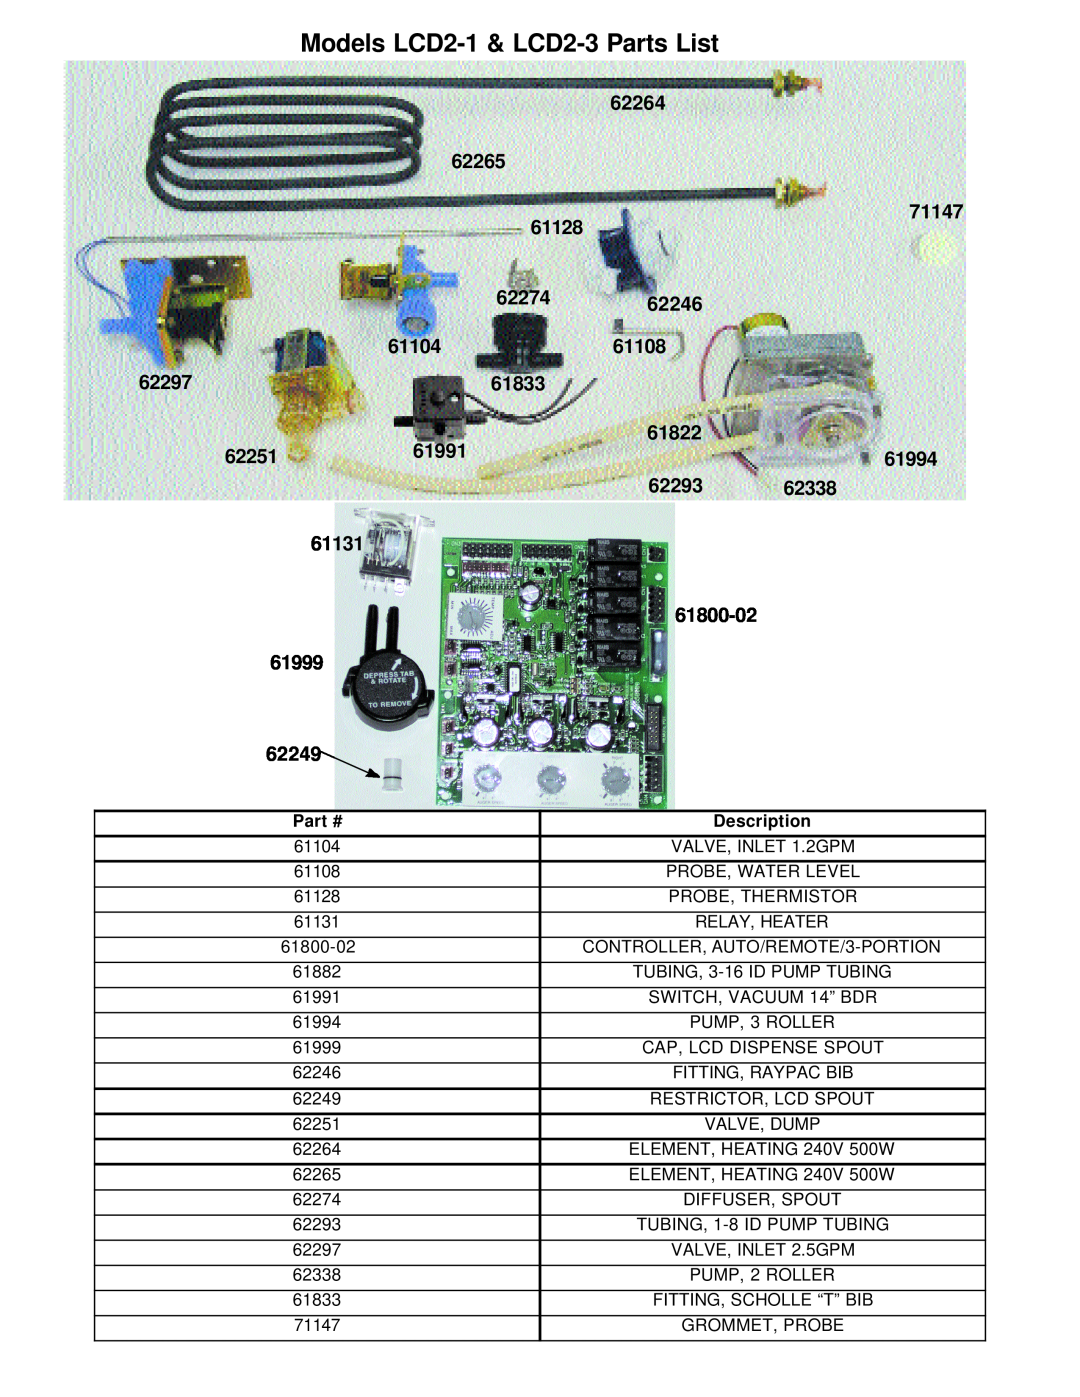 Grindmaster manual Models LCD2-1& LCD2-3Parts List, Description 